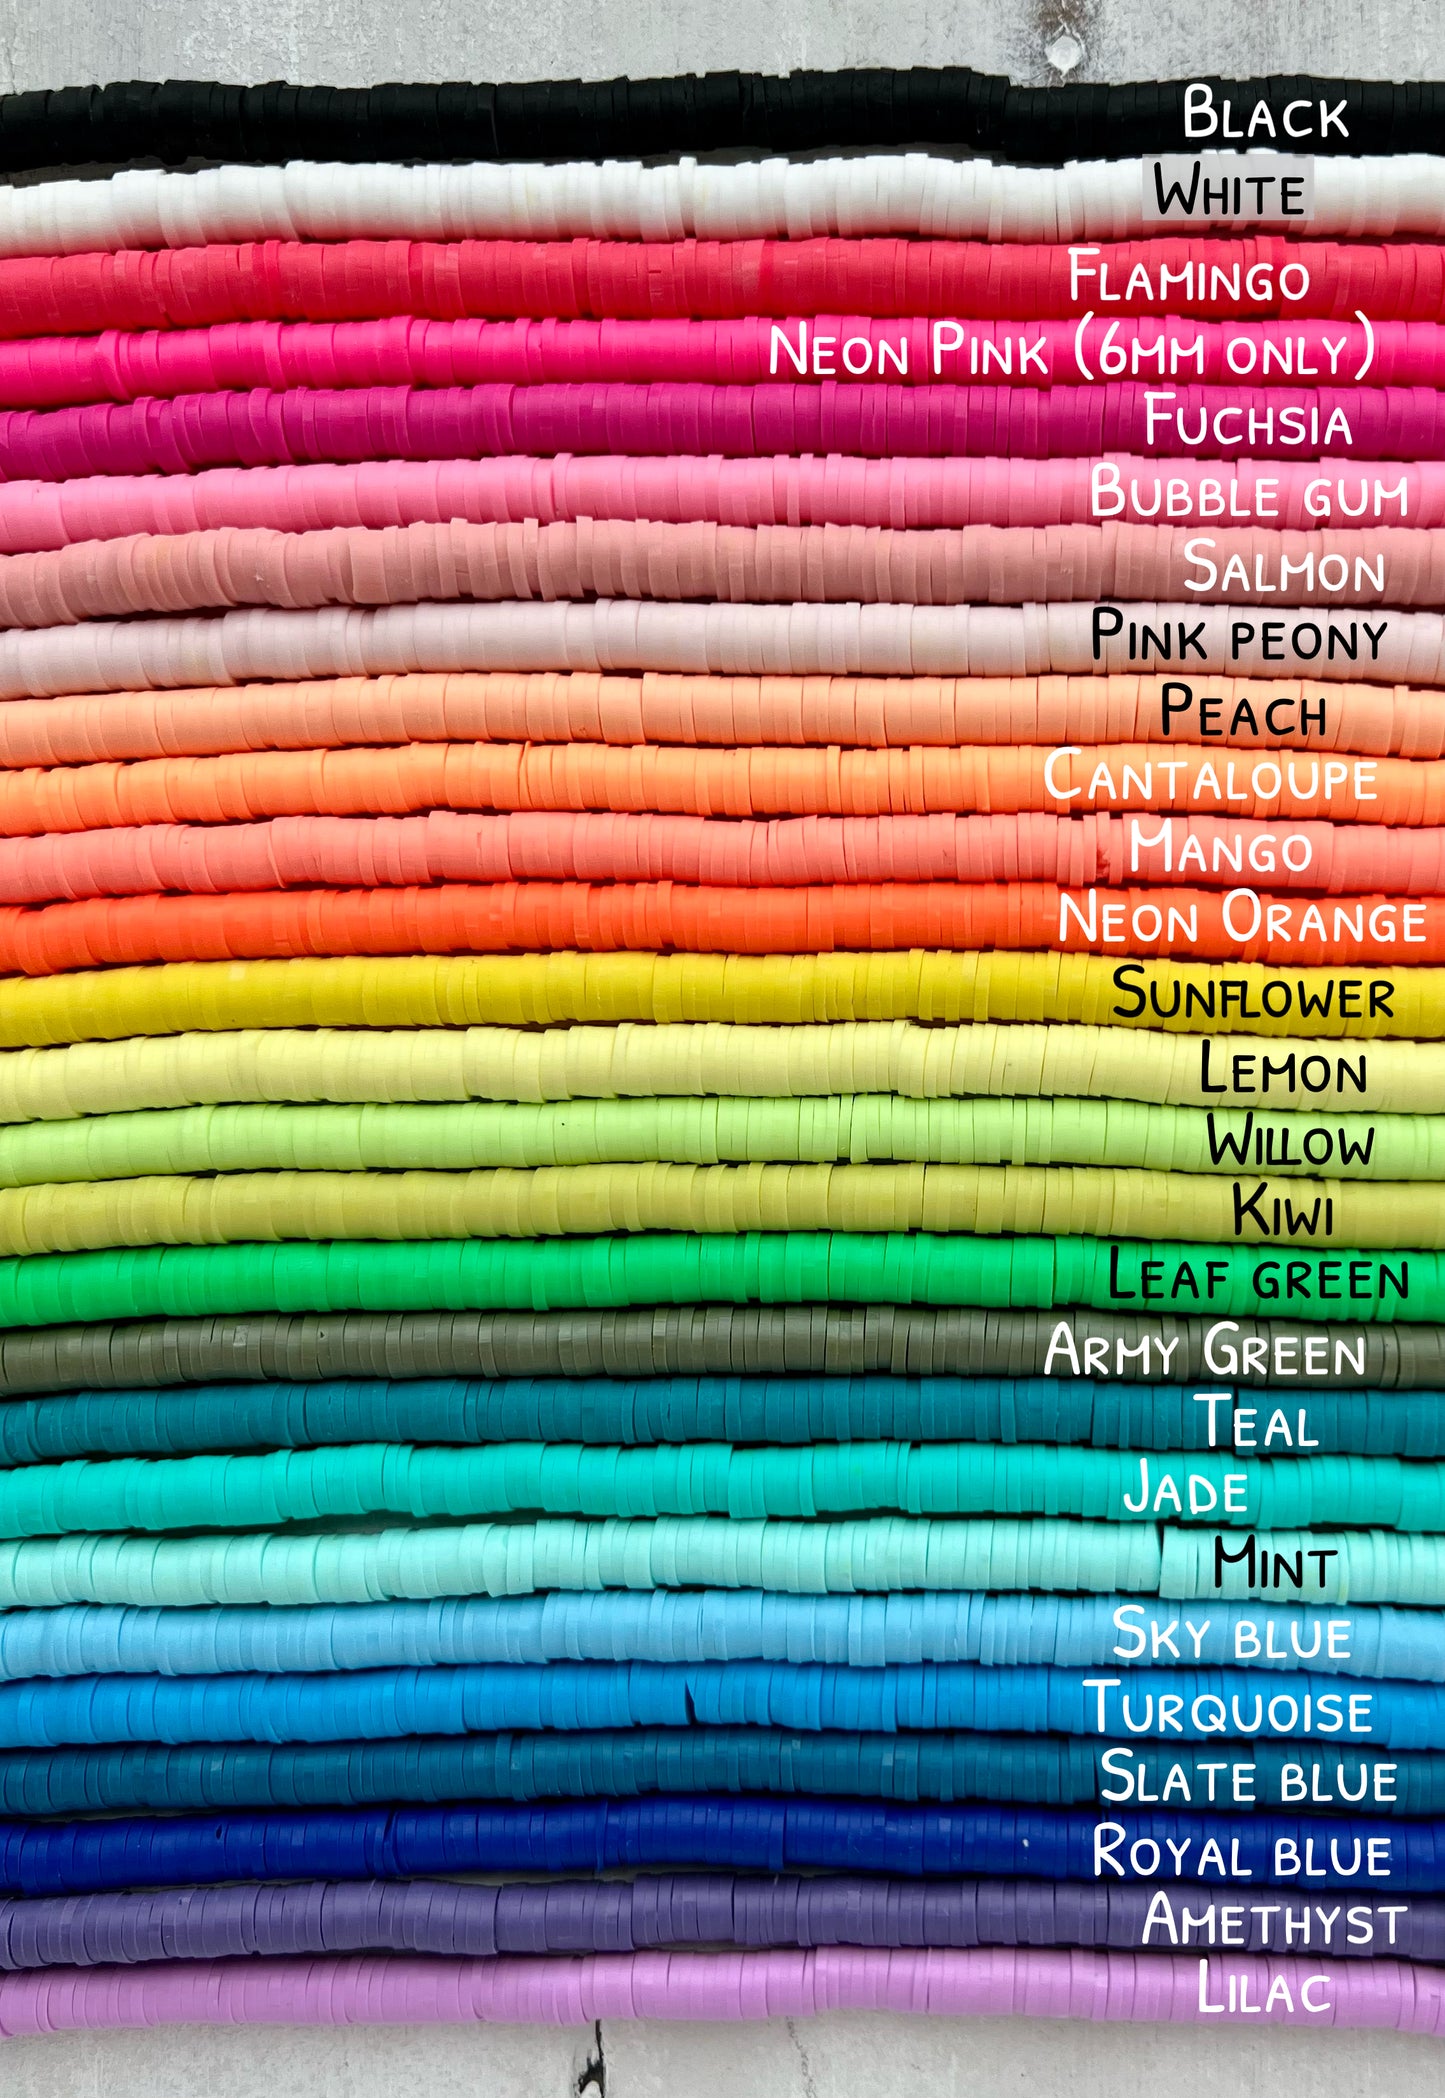 Neon Rainbow Heishi Bracelet 4mm